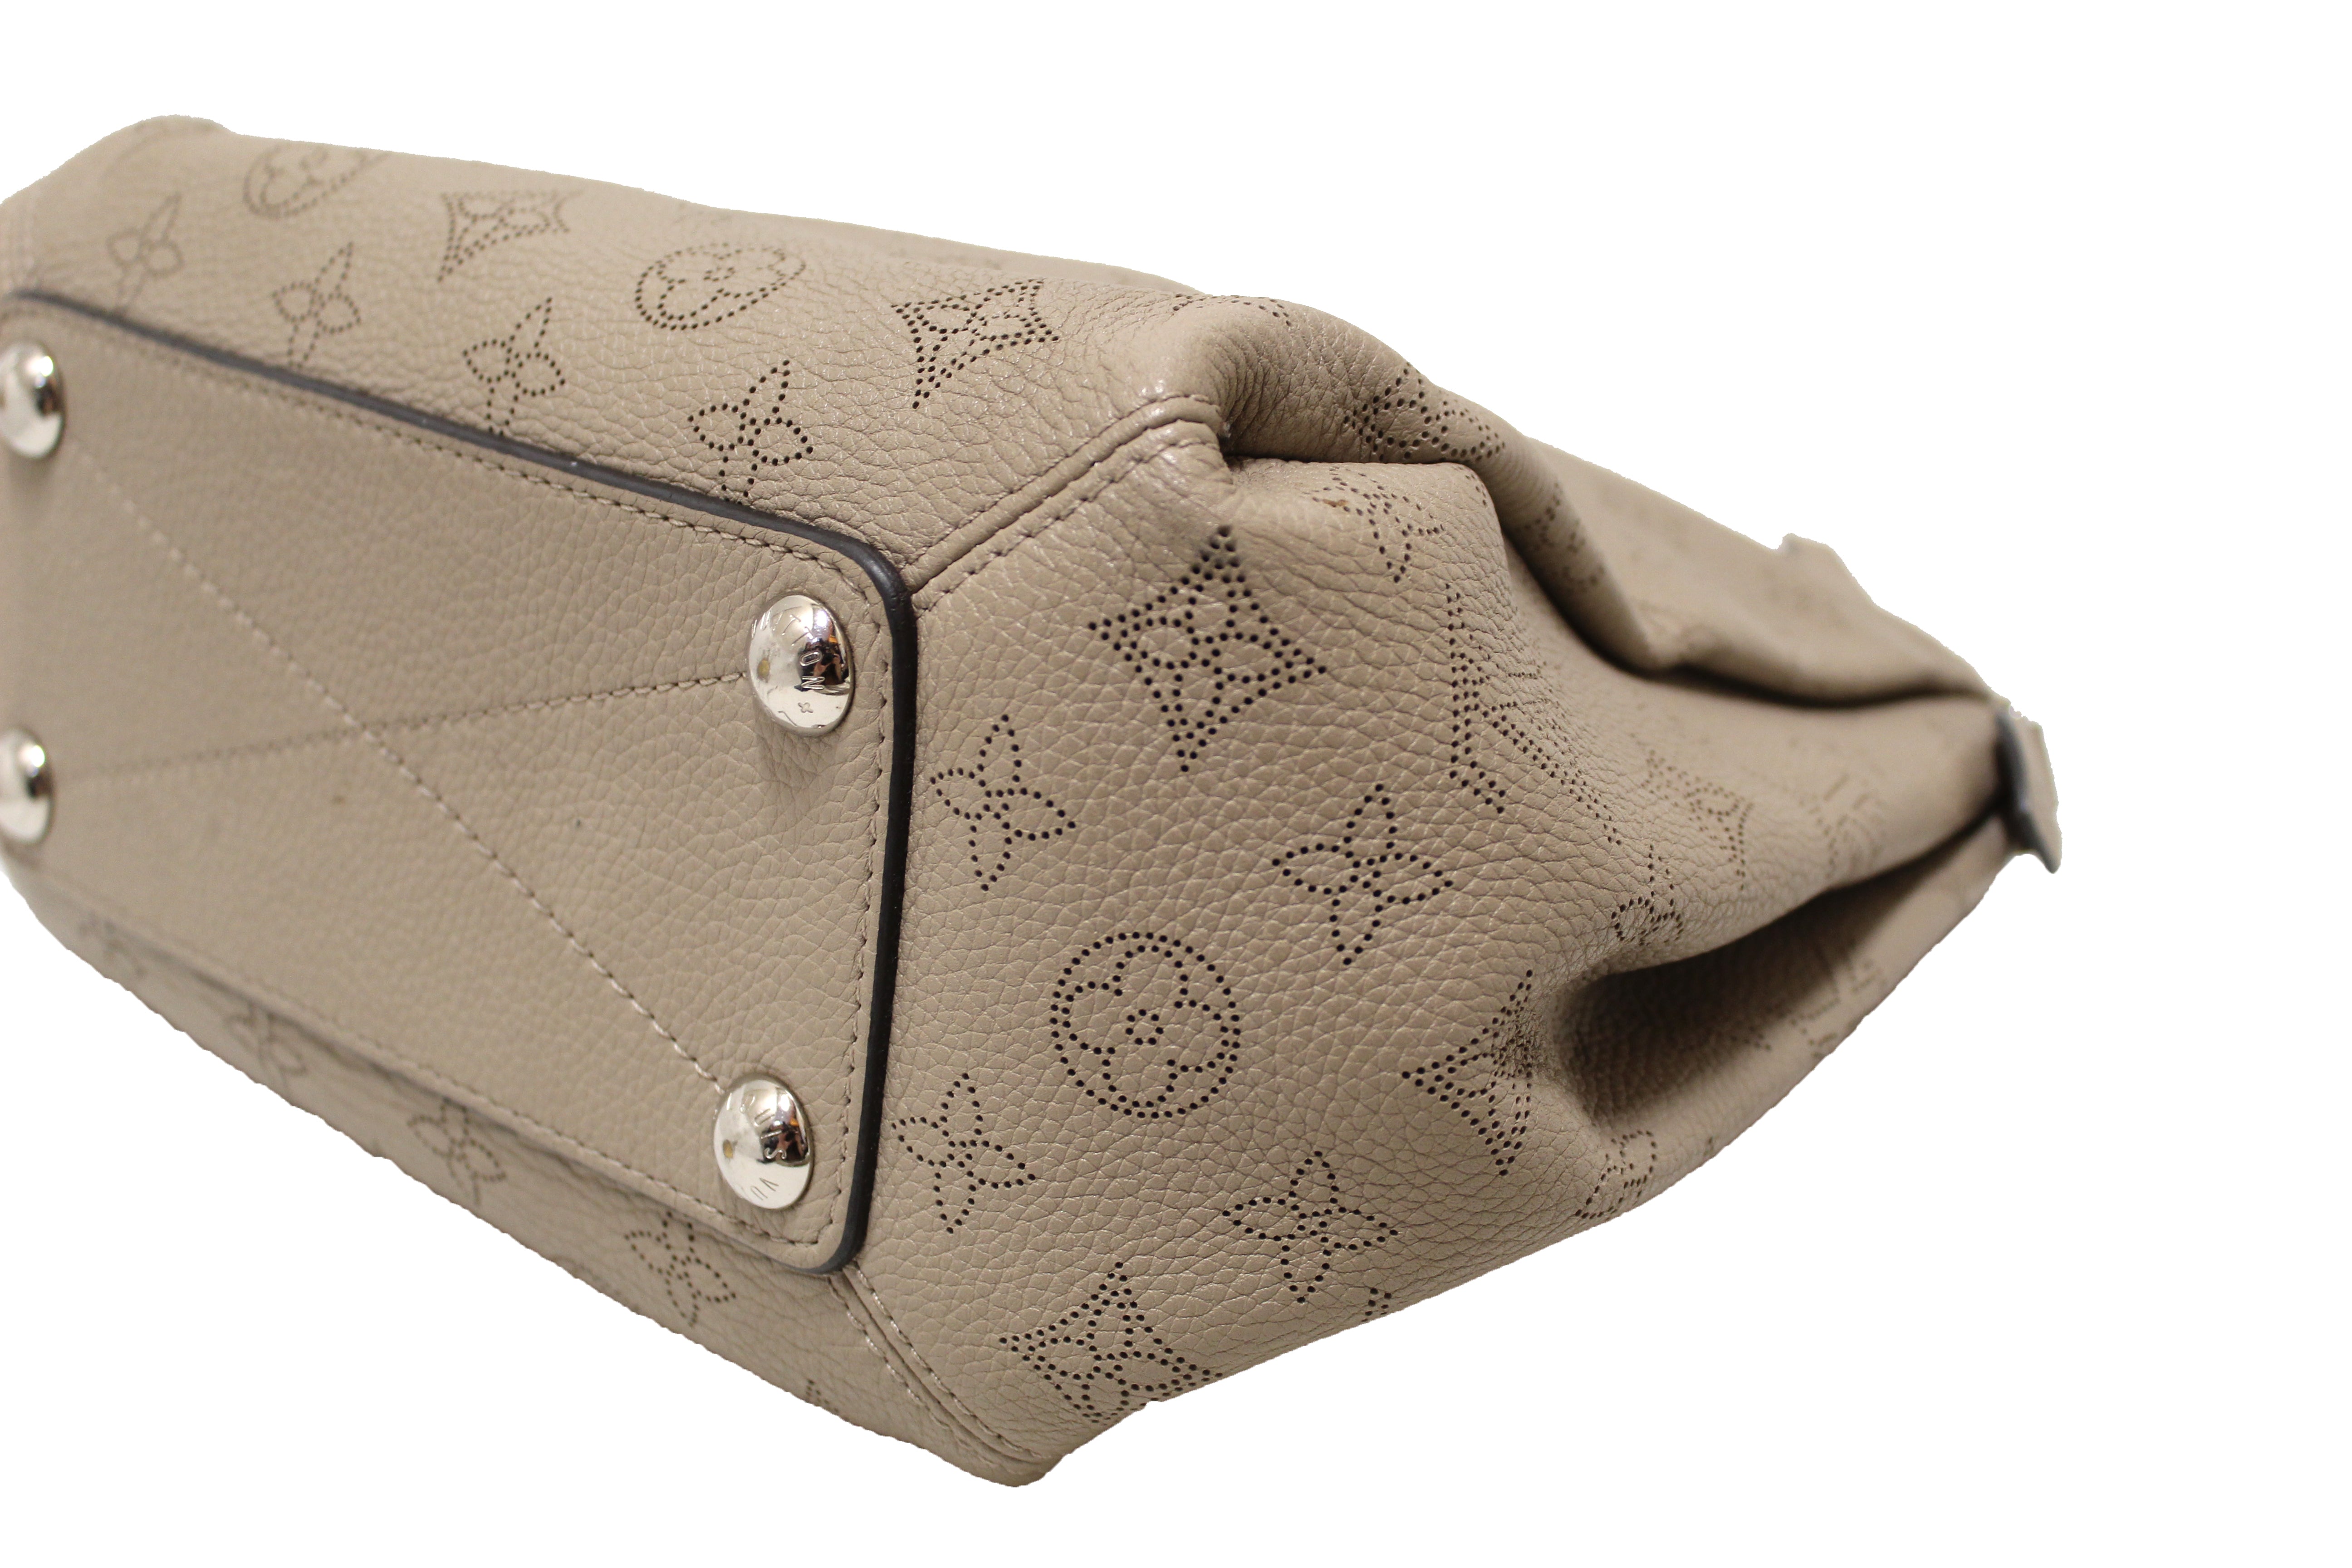 Louis Vuitton Beige Leather Babylone Chain BB Shoulder Bag Louis